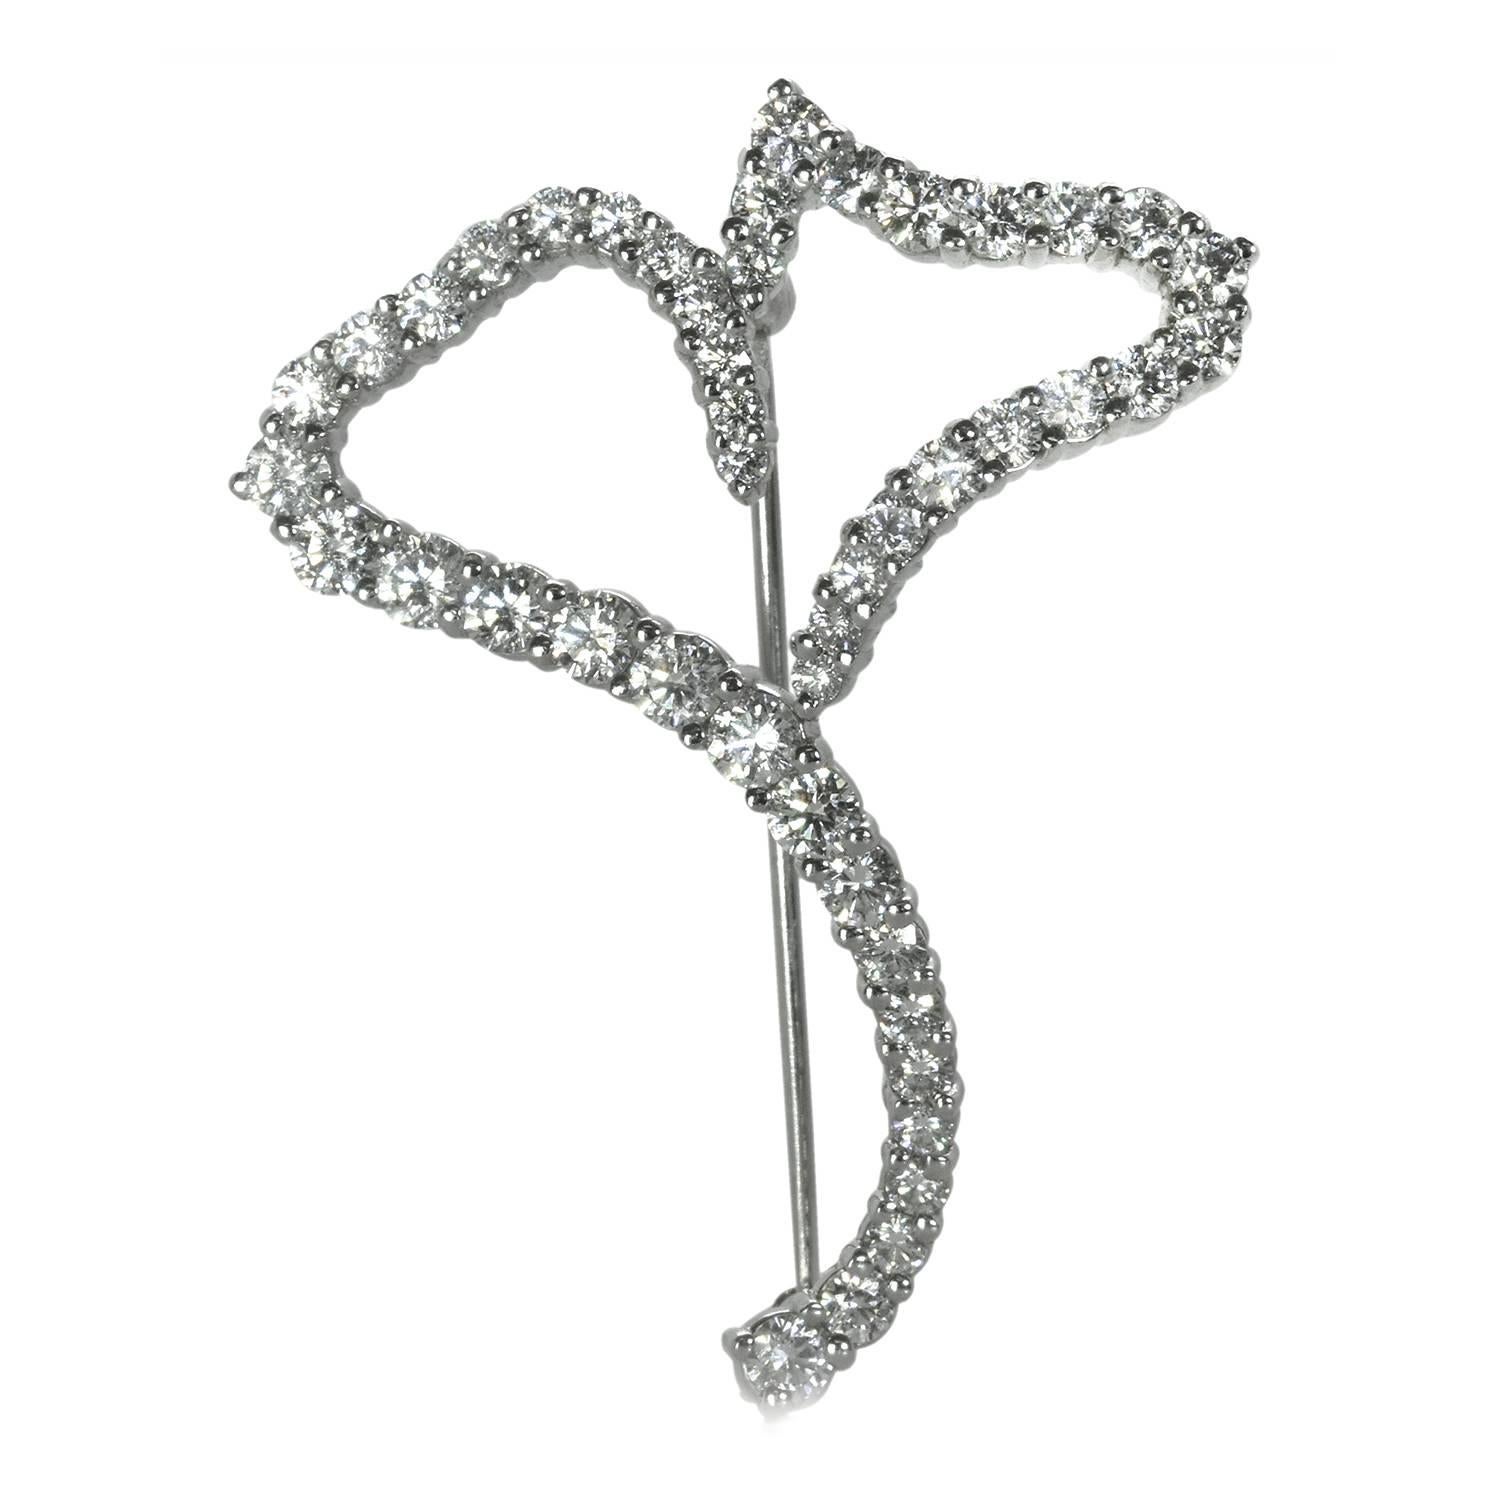 Tiffany & Co. Diamond Brooch